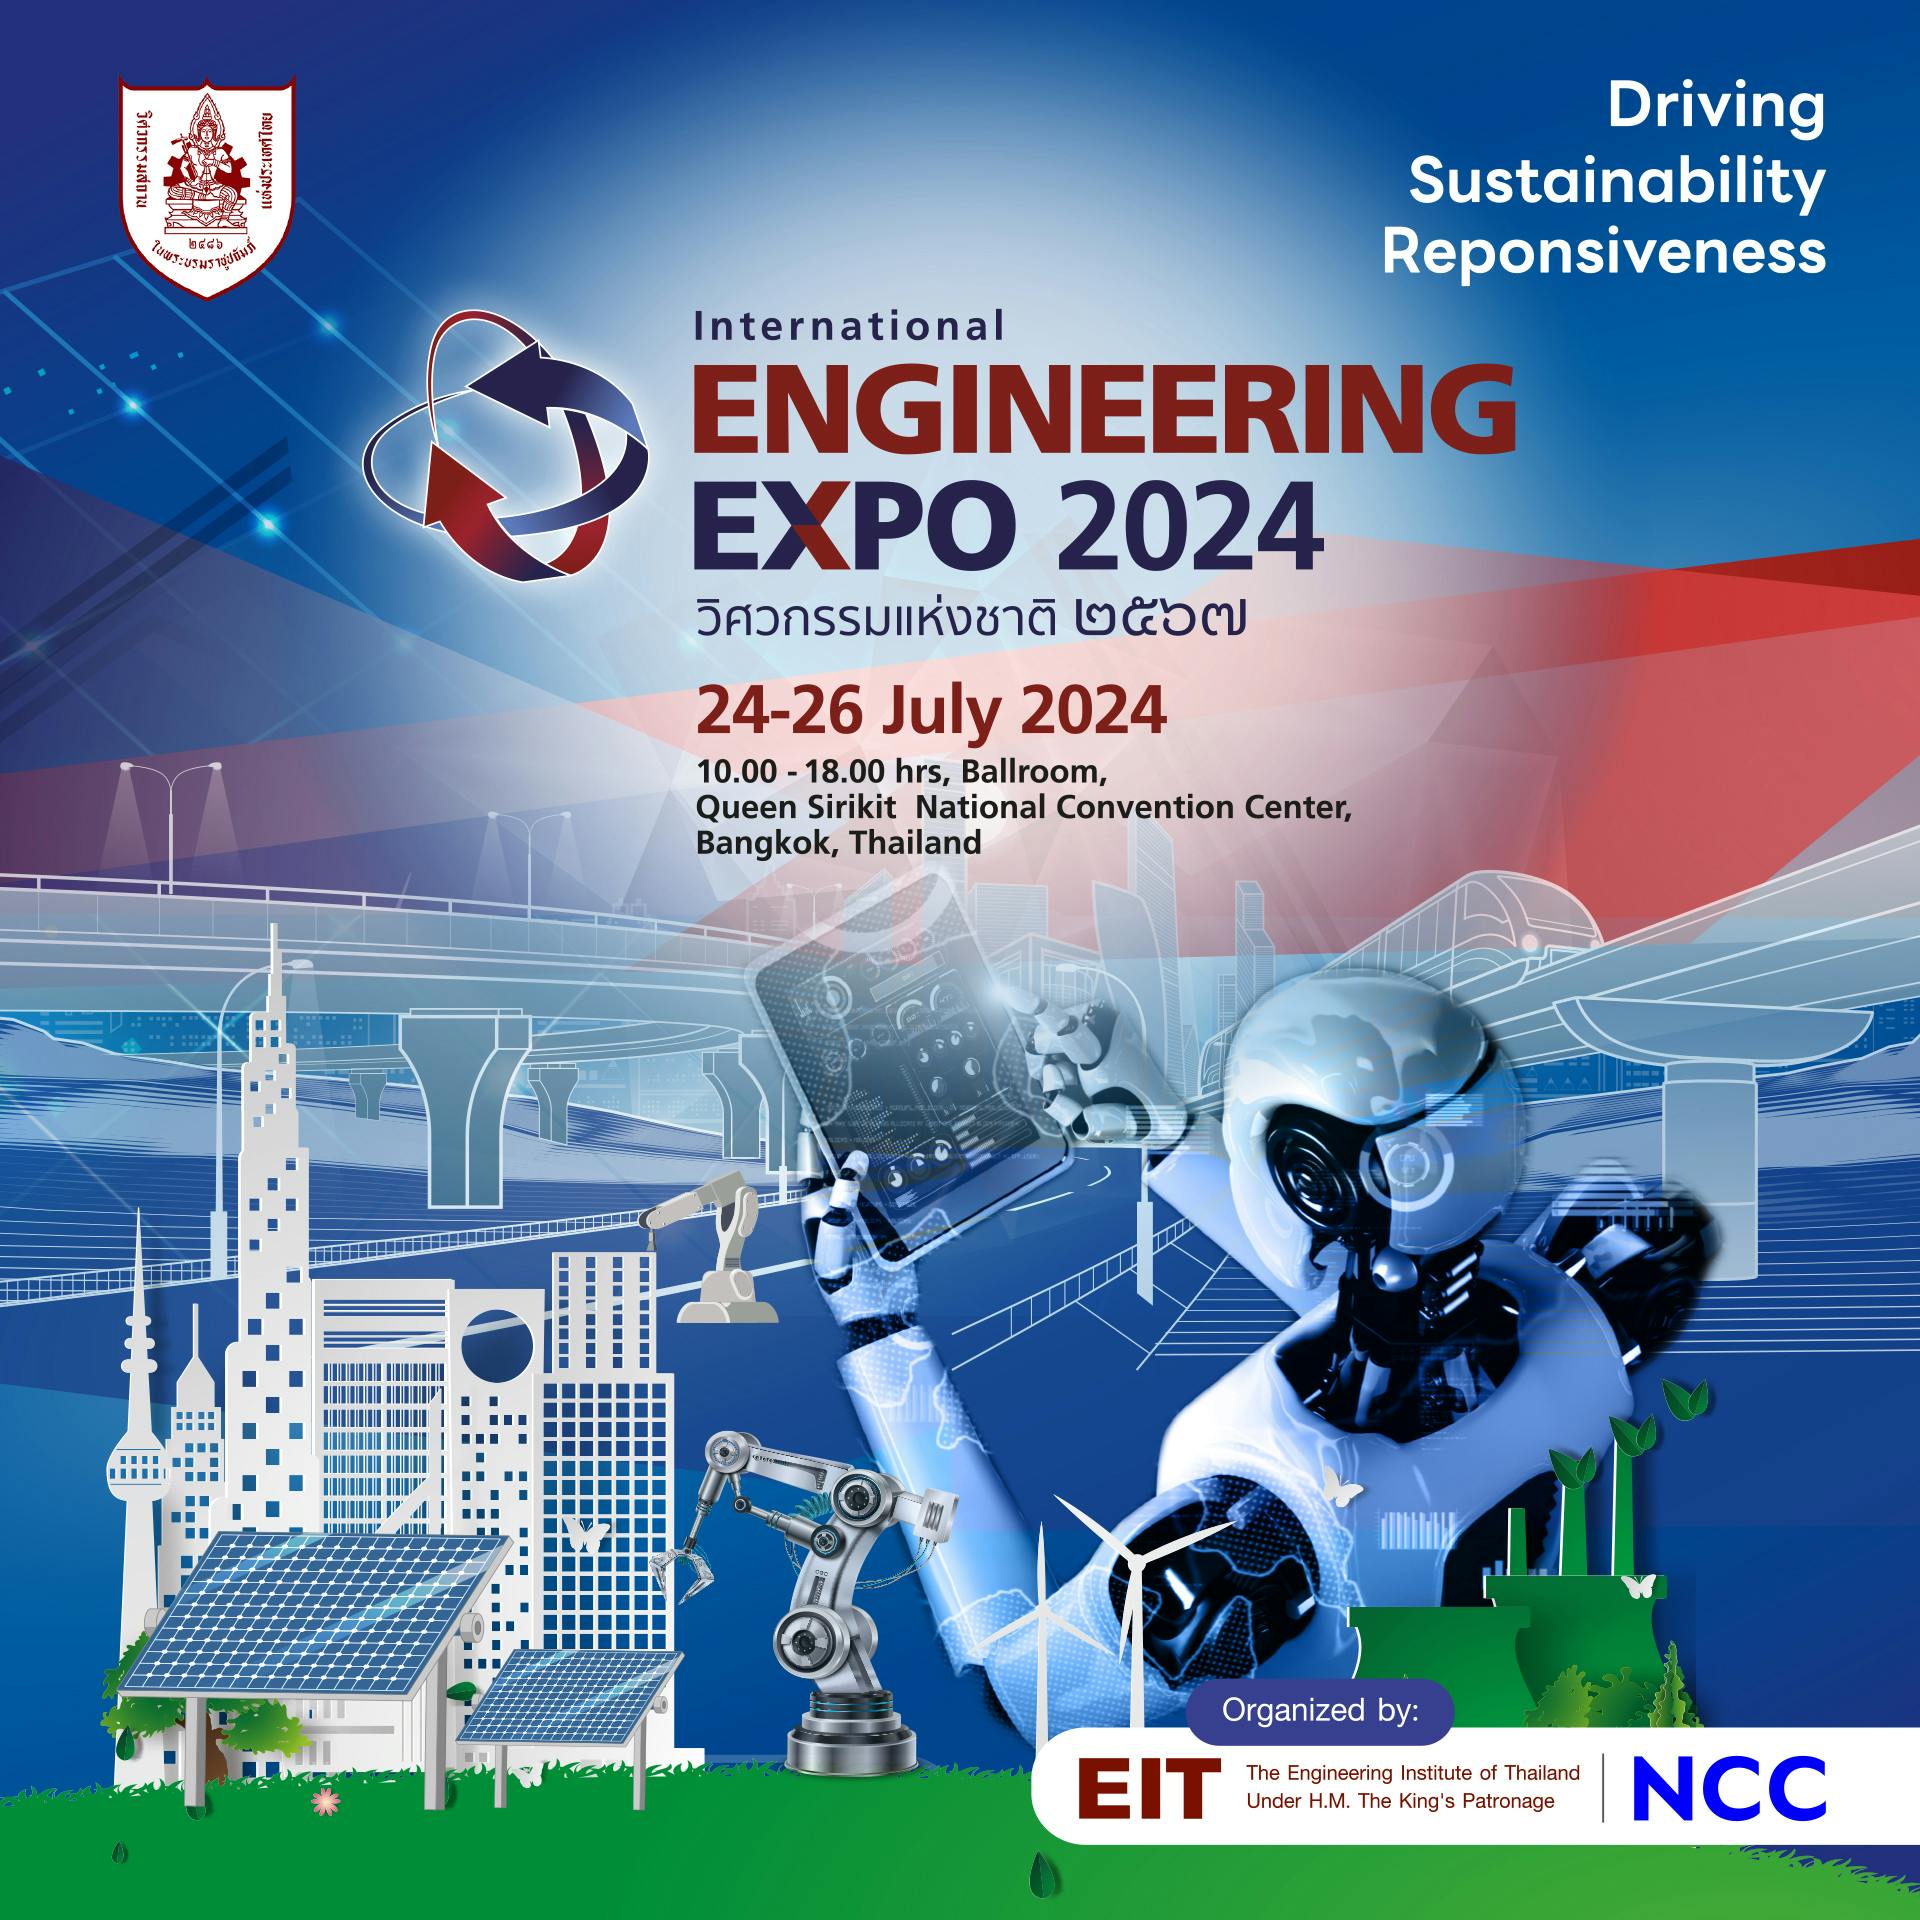 QSNCC International Engineering Expo 2024